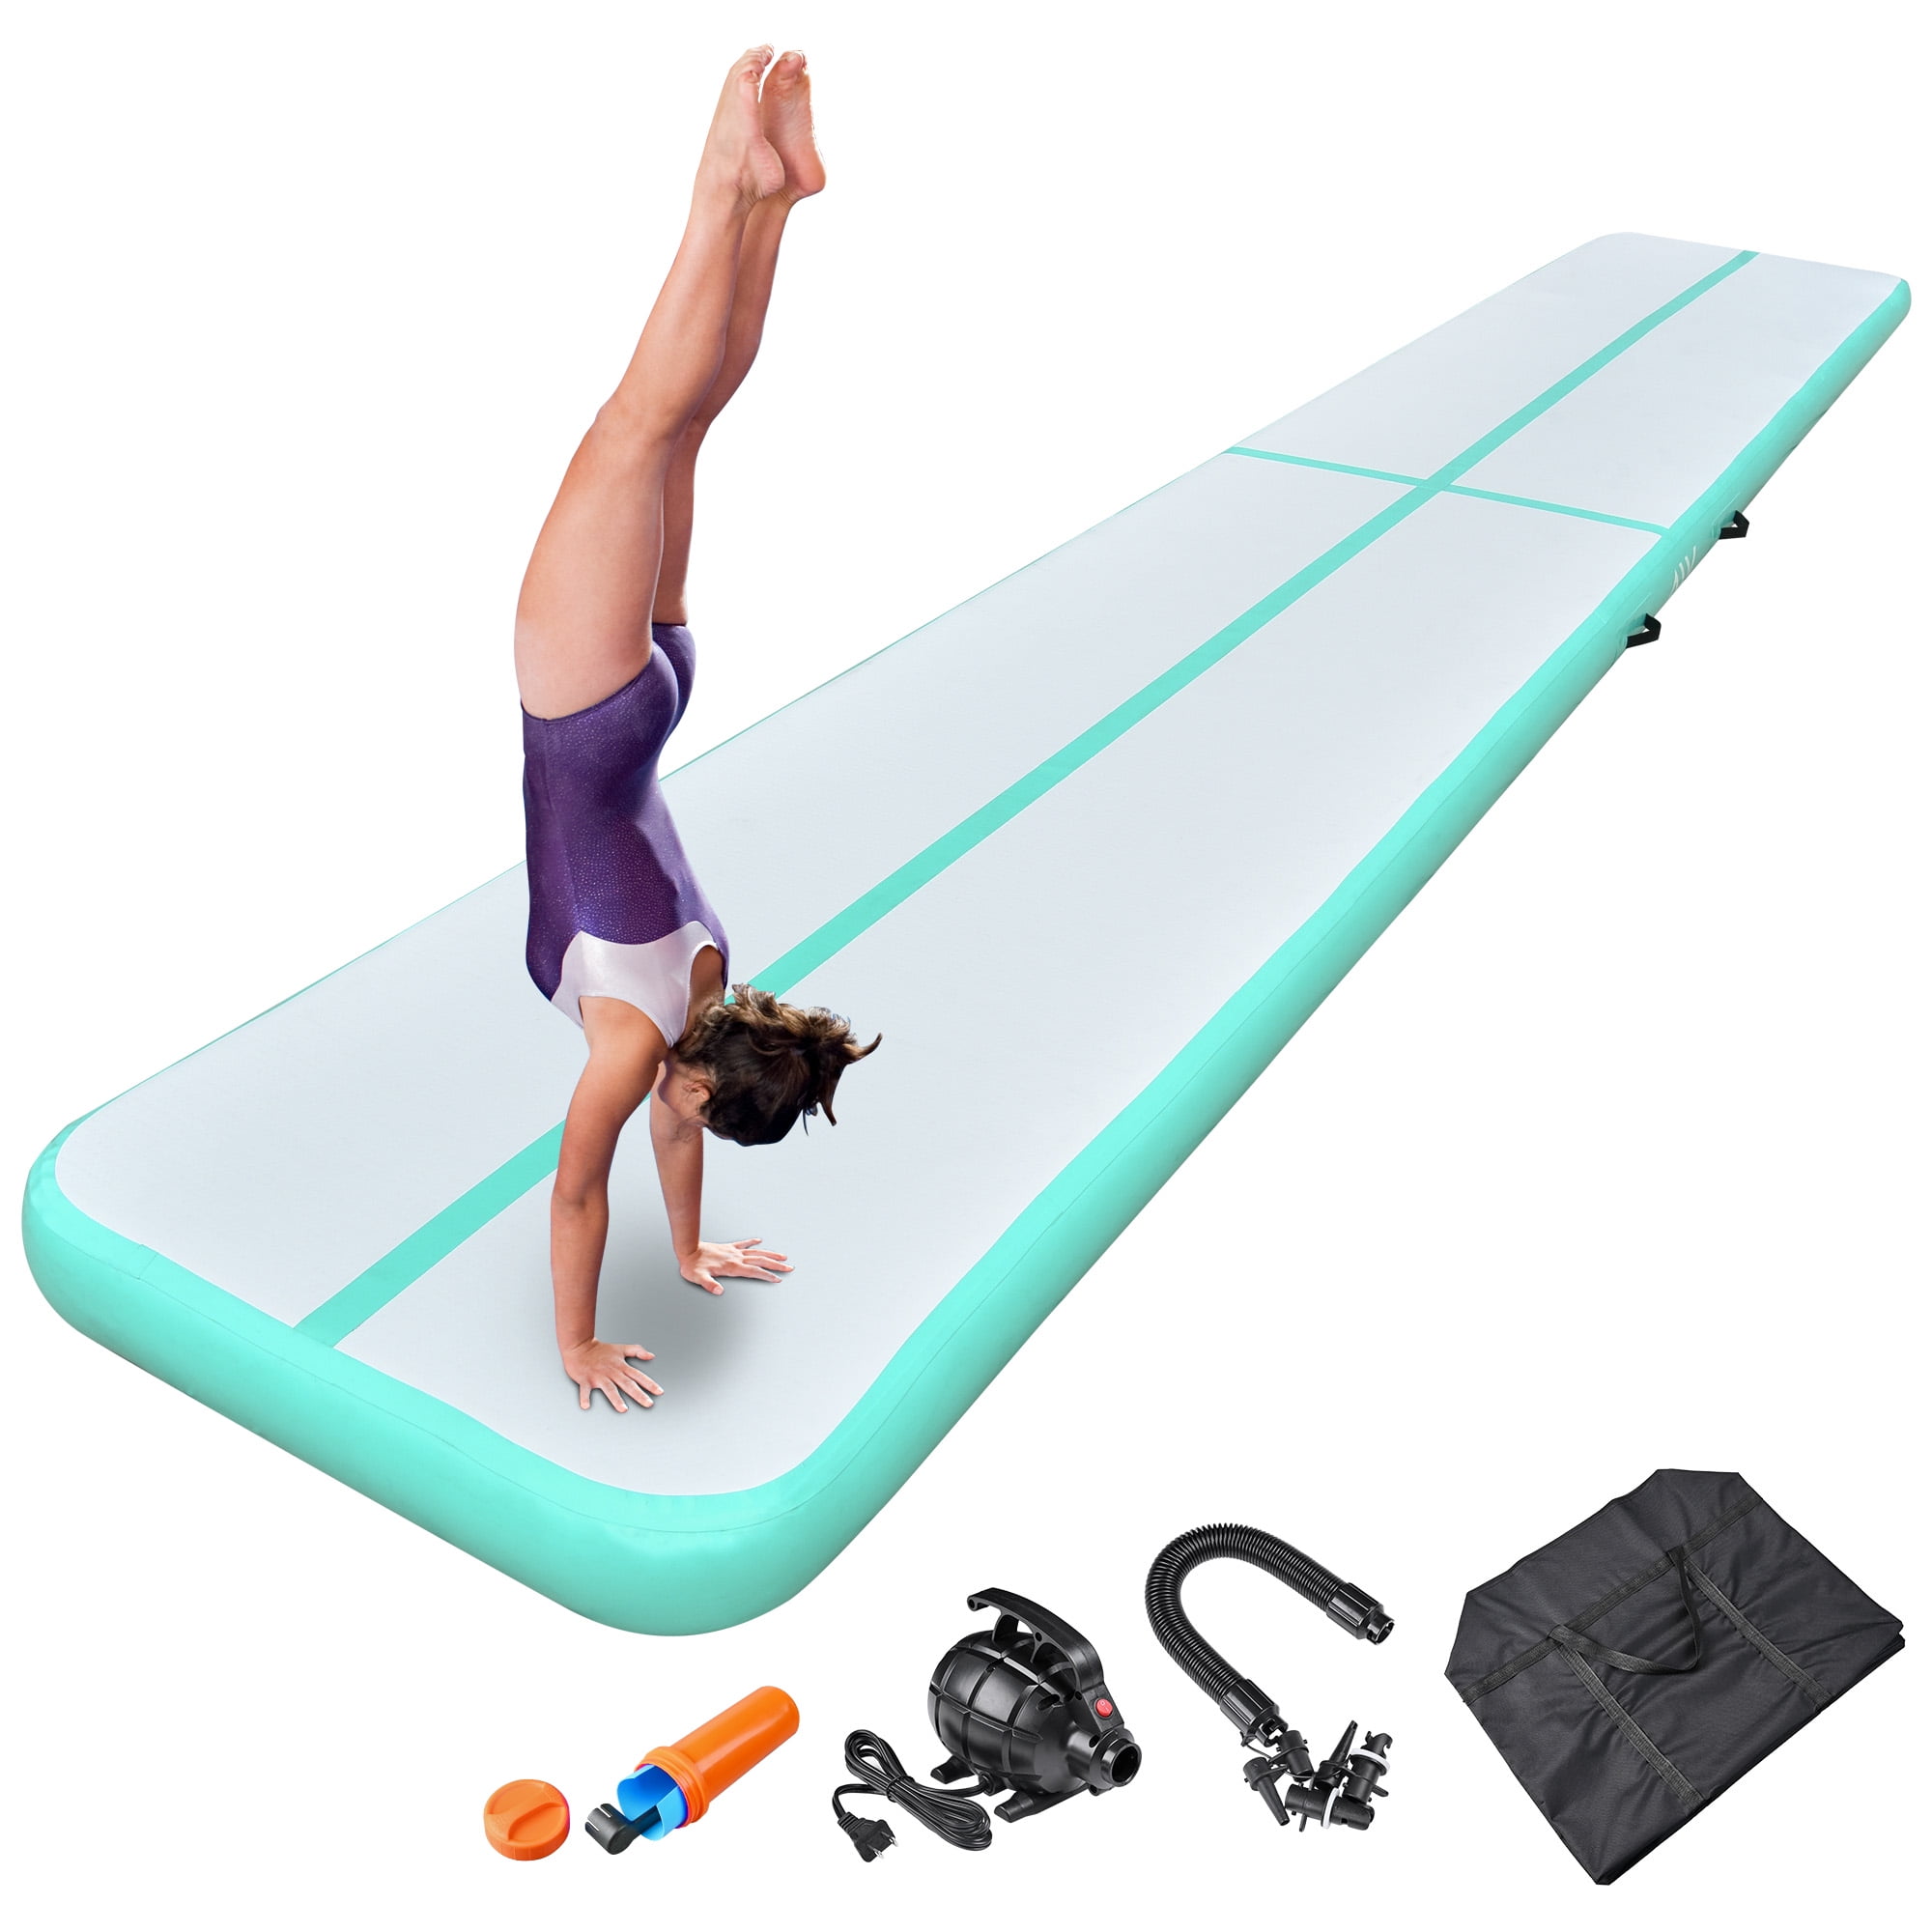 show original title Details about   100x85cm Air Tumbling Roll Yoga Track Gymnastics Mat Inflatable Air Mattress 